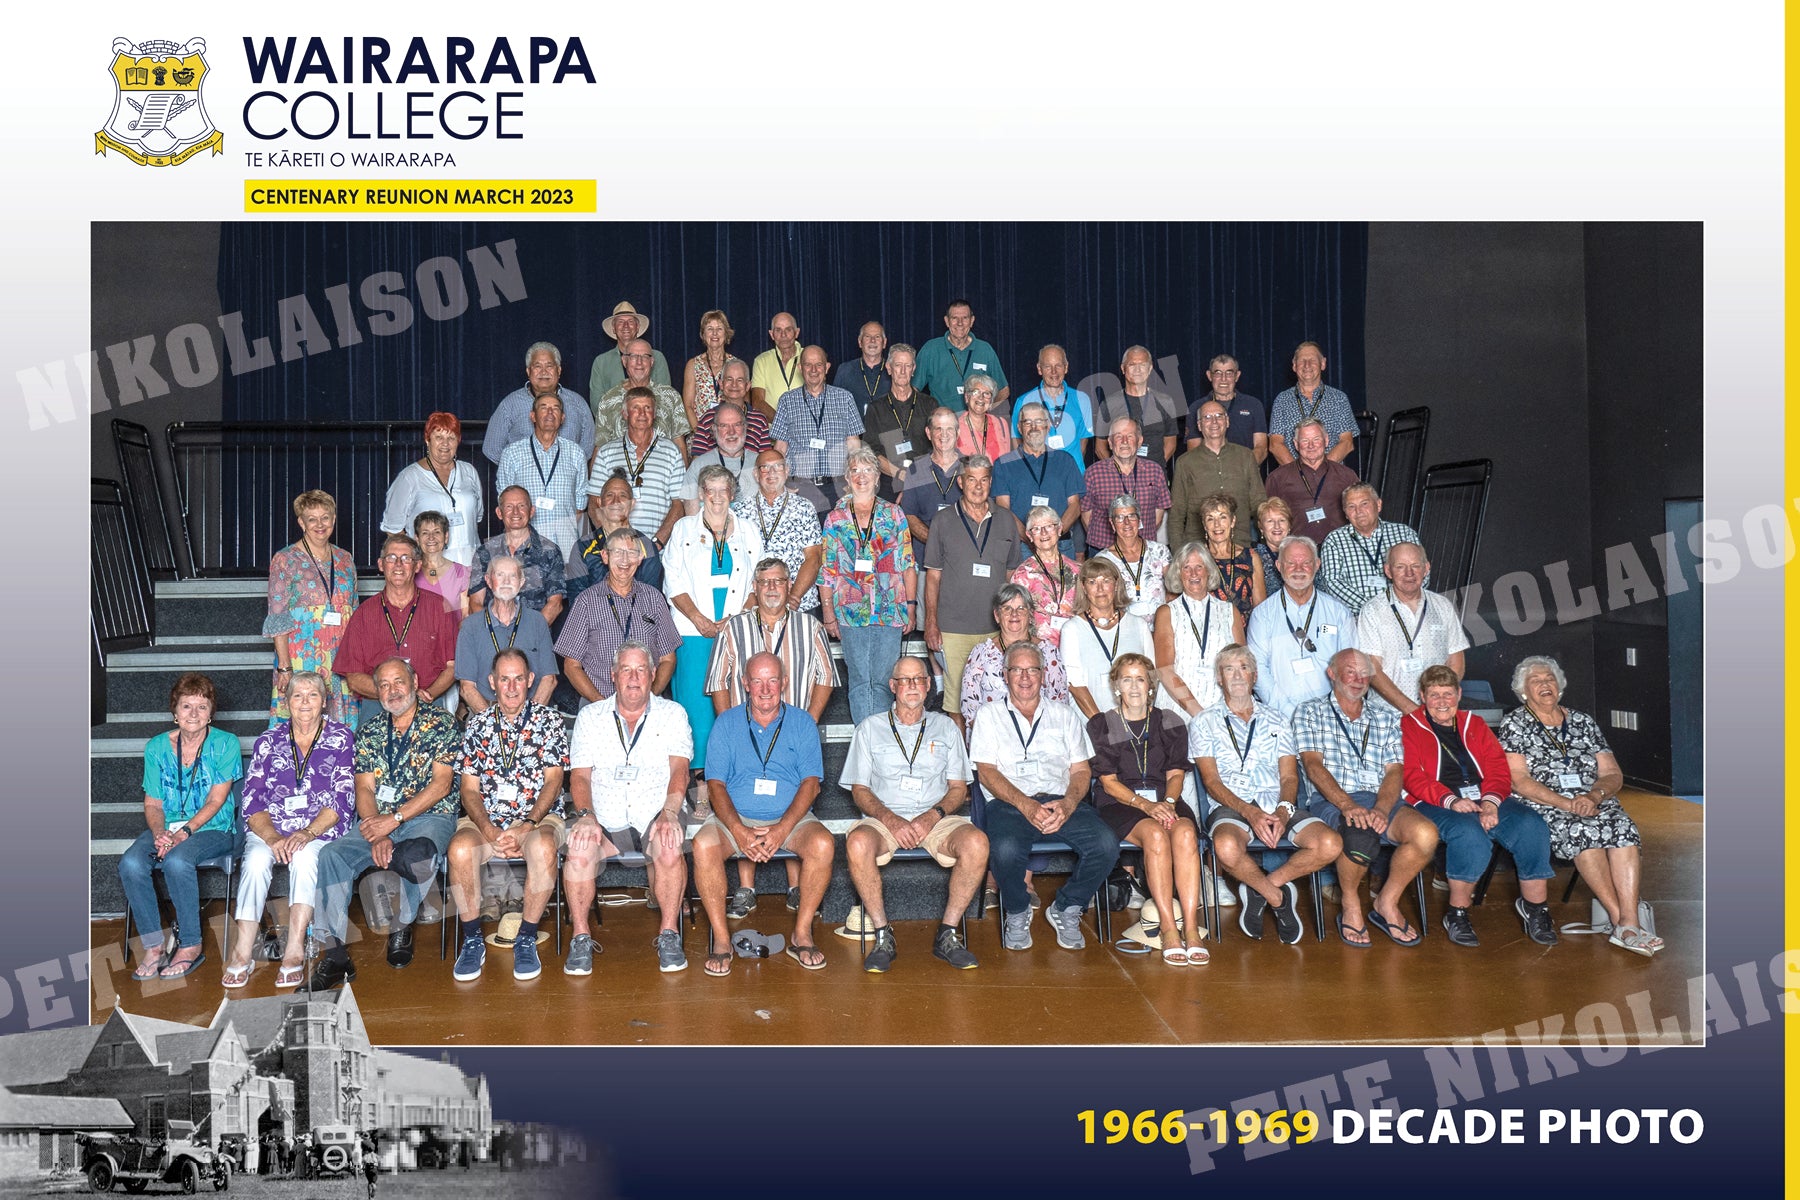 1966-69 Decade Photo - Wairarapa College Centenary